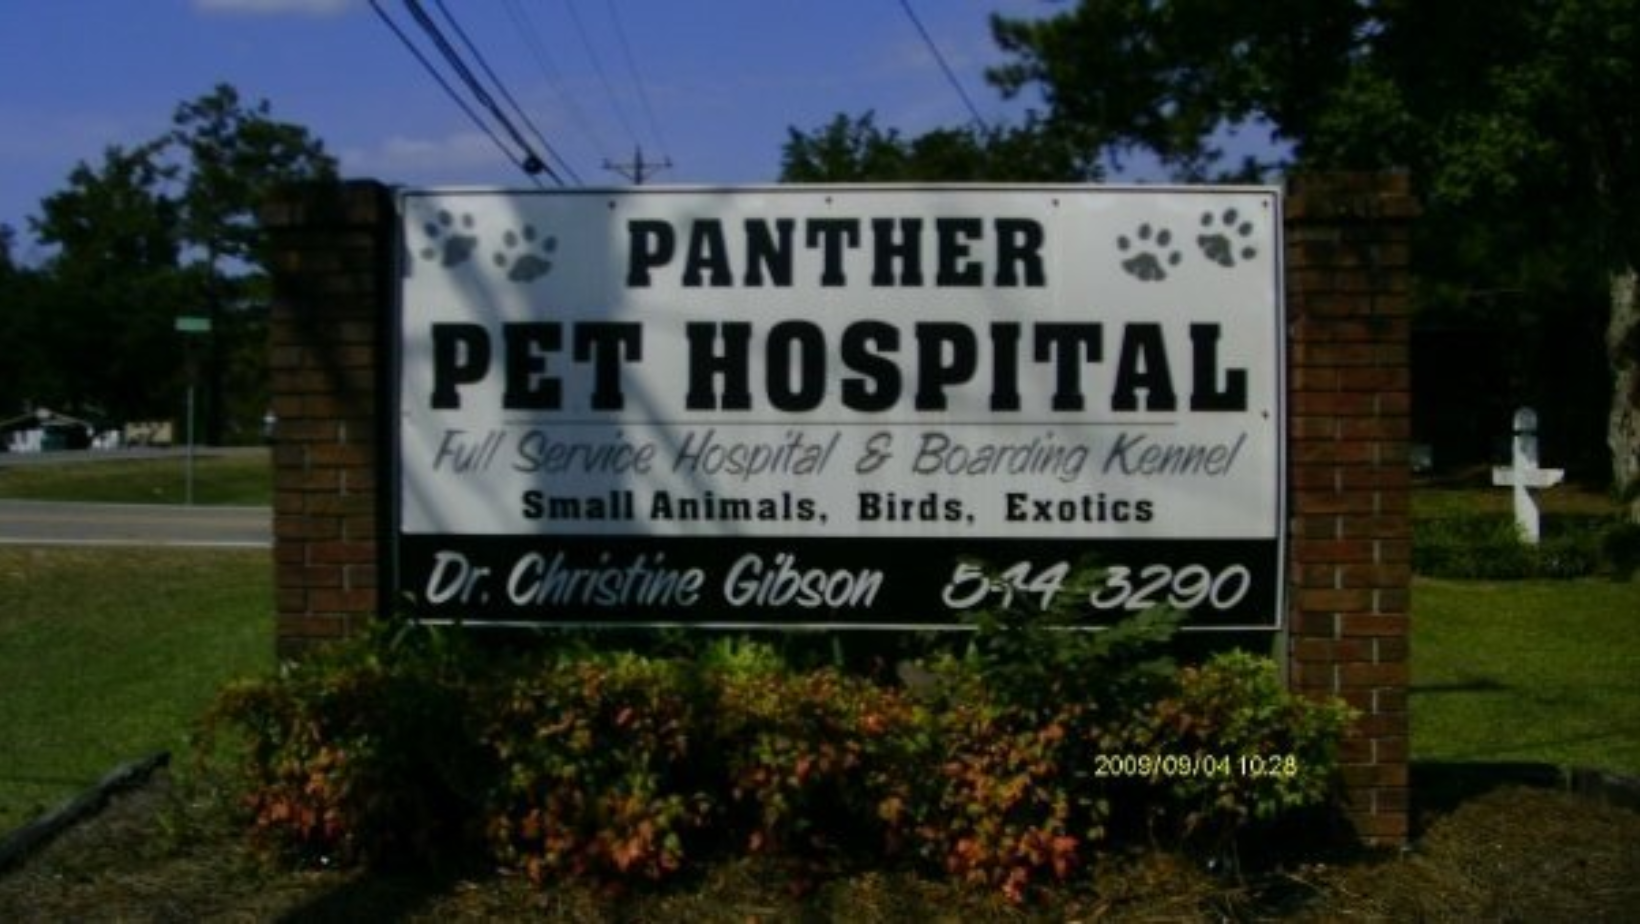 The Pet Hospitals (Panther)